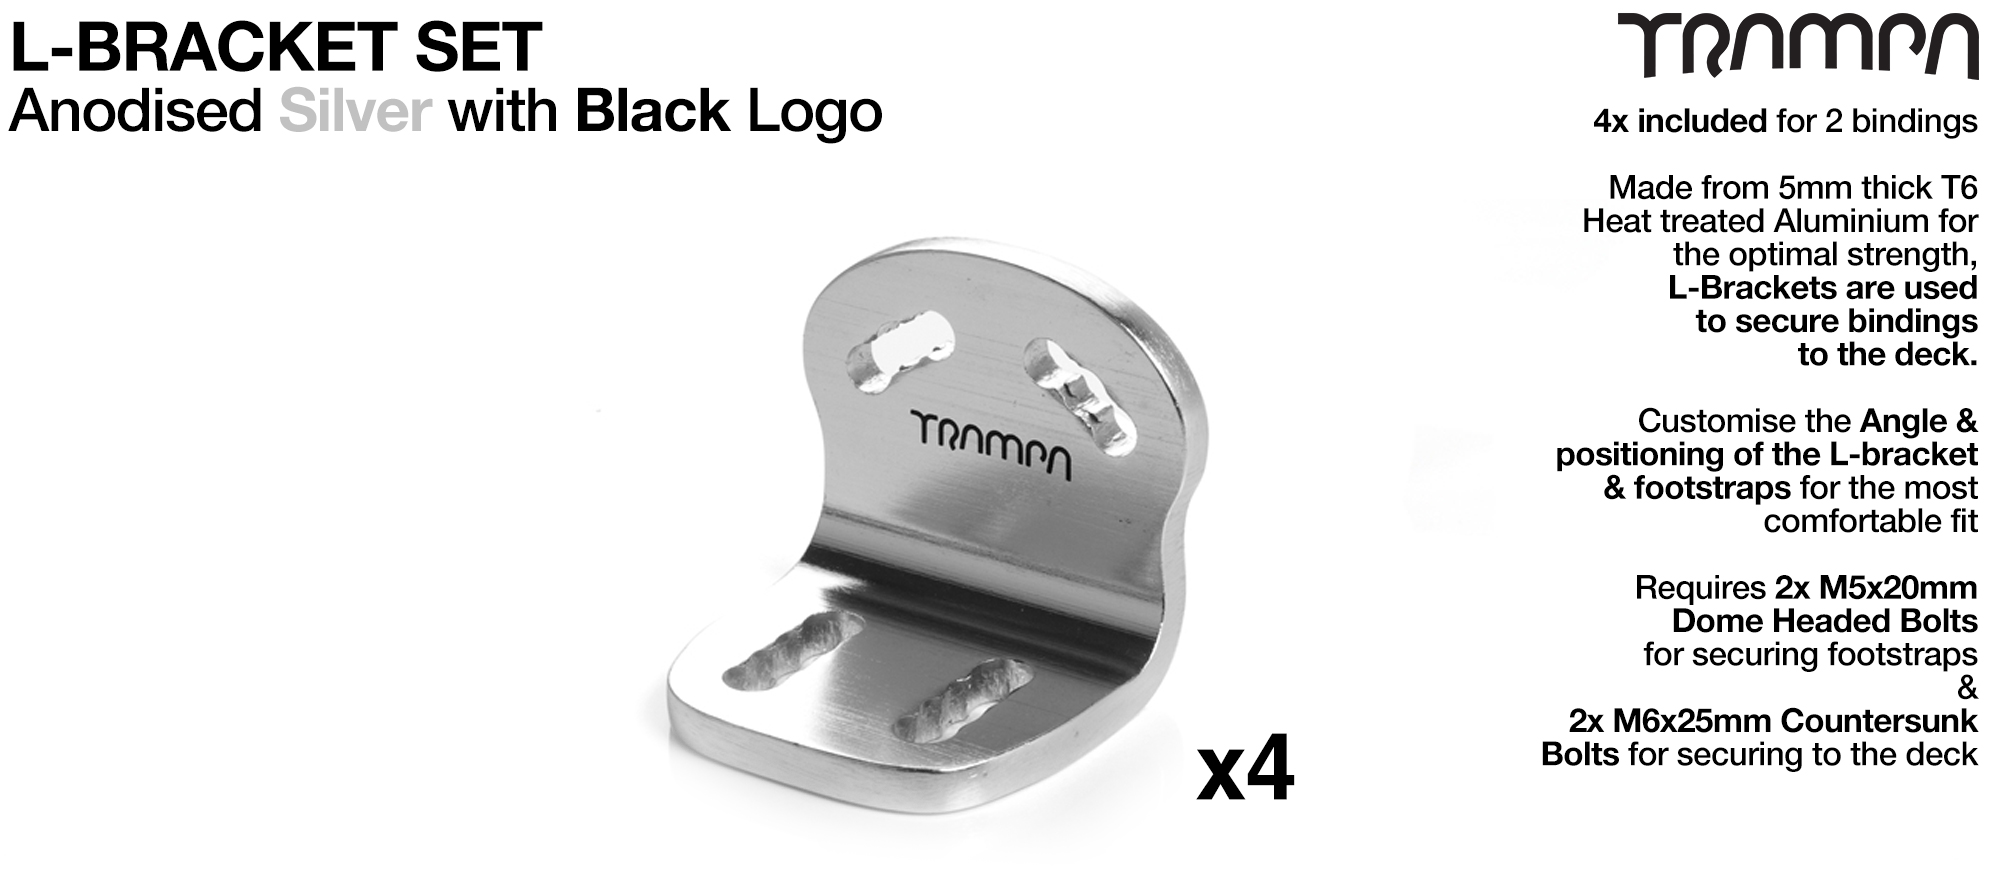 L Bracket - Anodised SILVER with BLACK logo x 4